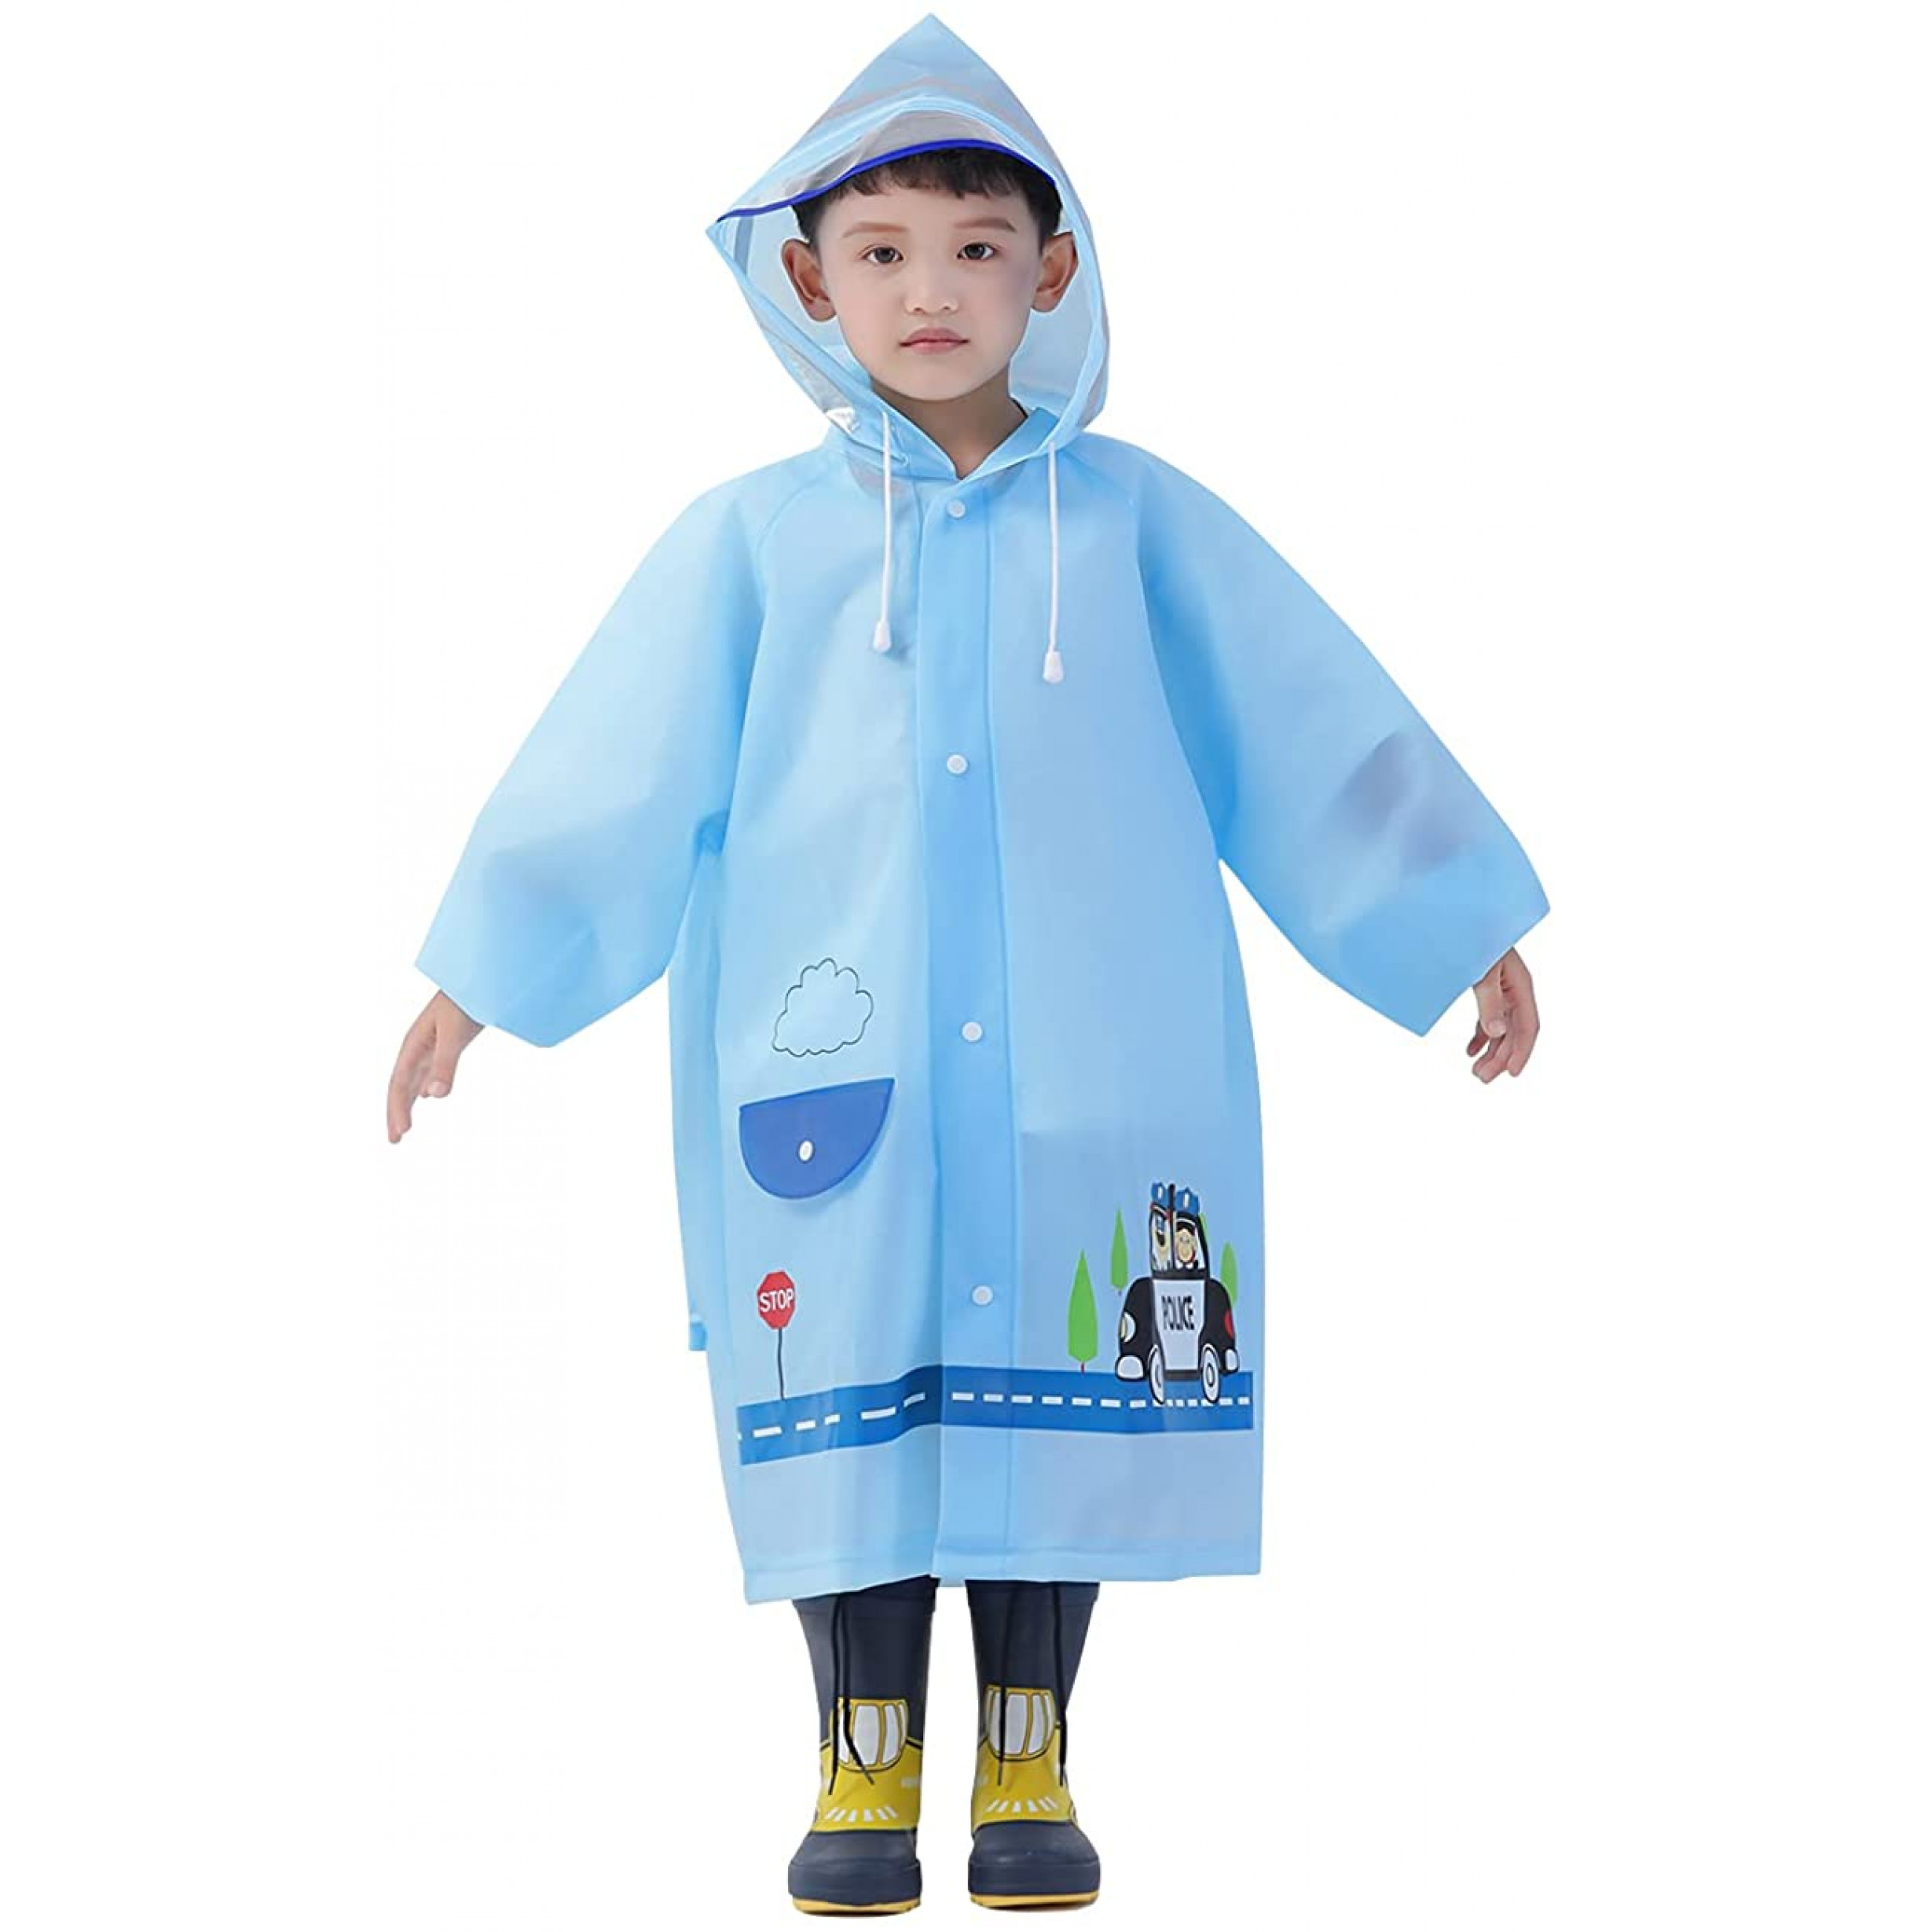 Kids Raincoat Kids Poncho Kids Rain Jacket Kids Rain Suit Lightweight Rainwear Reflective Reusable with Hood, Car Blue, 3XL